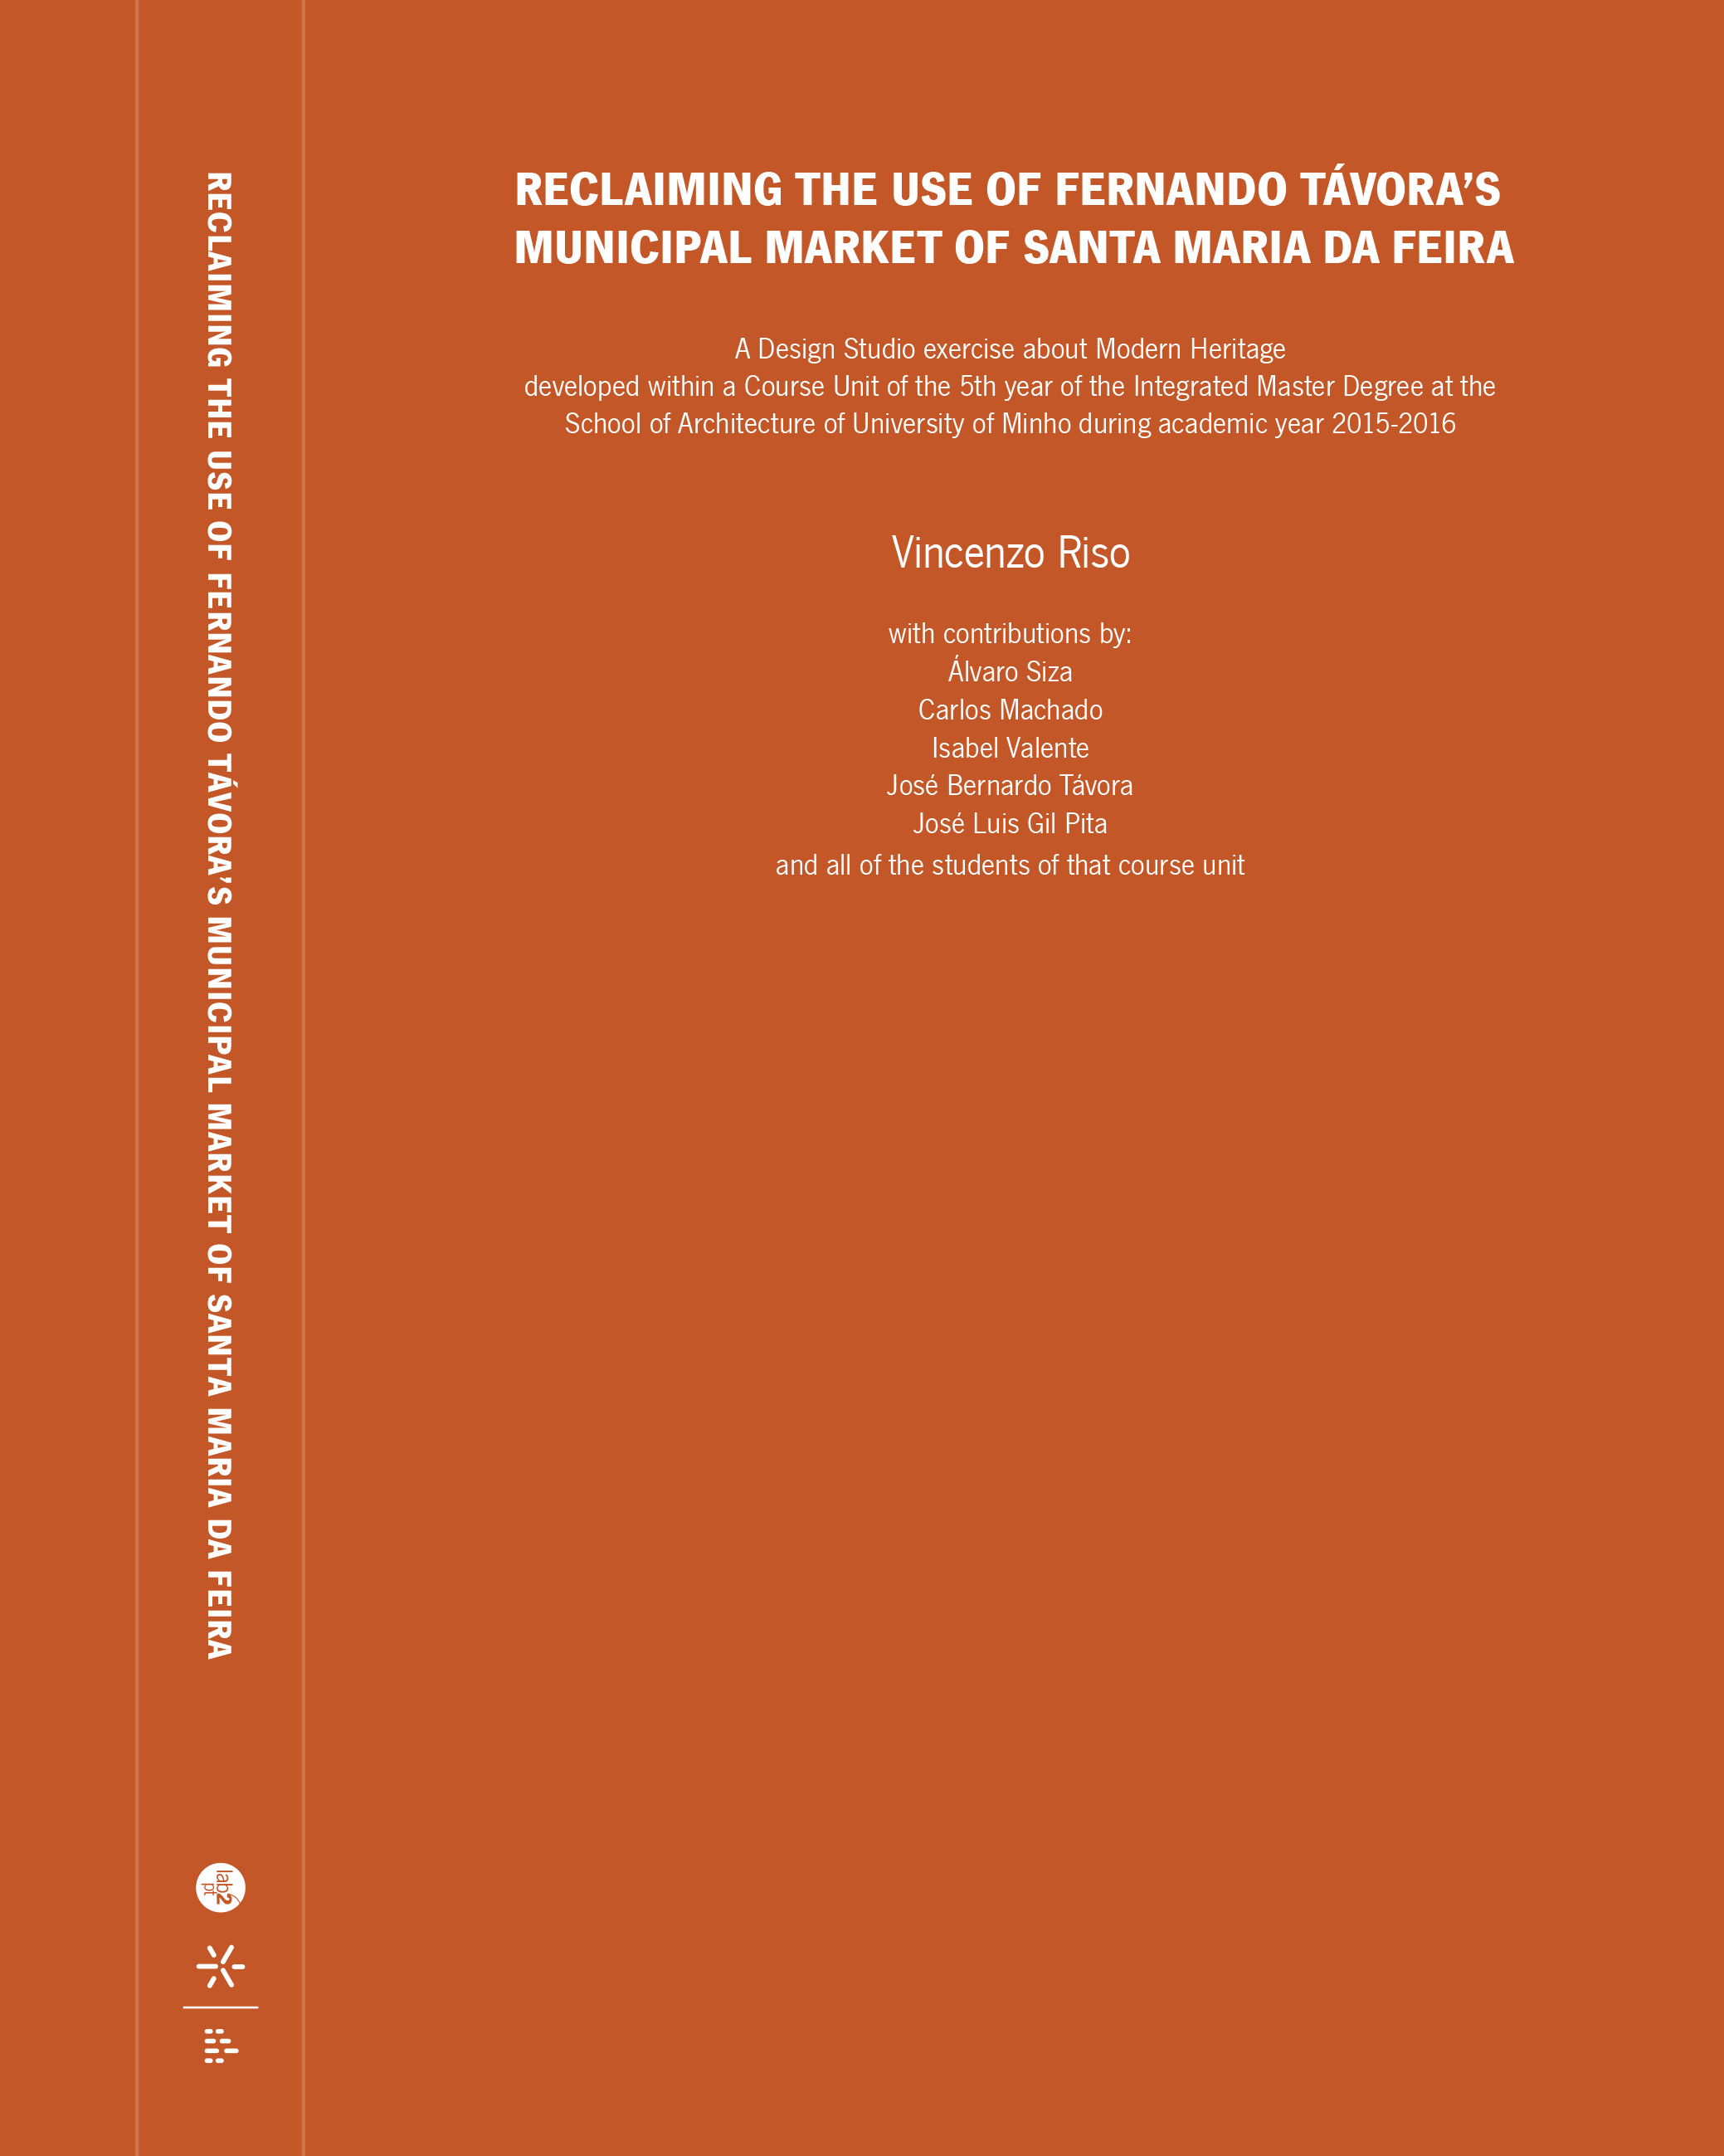 2018 - Reclaiming the Use of Fernando Távora’s Municipal Market of Santa Maria da Feira image